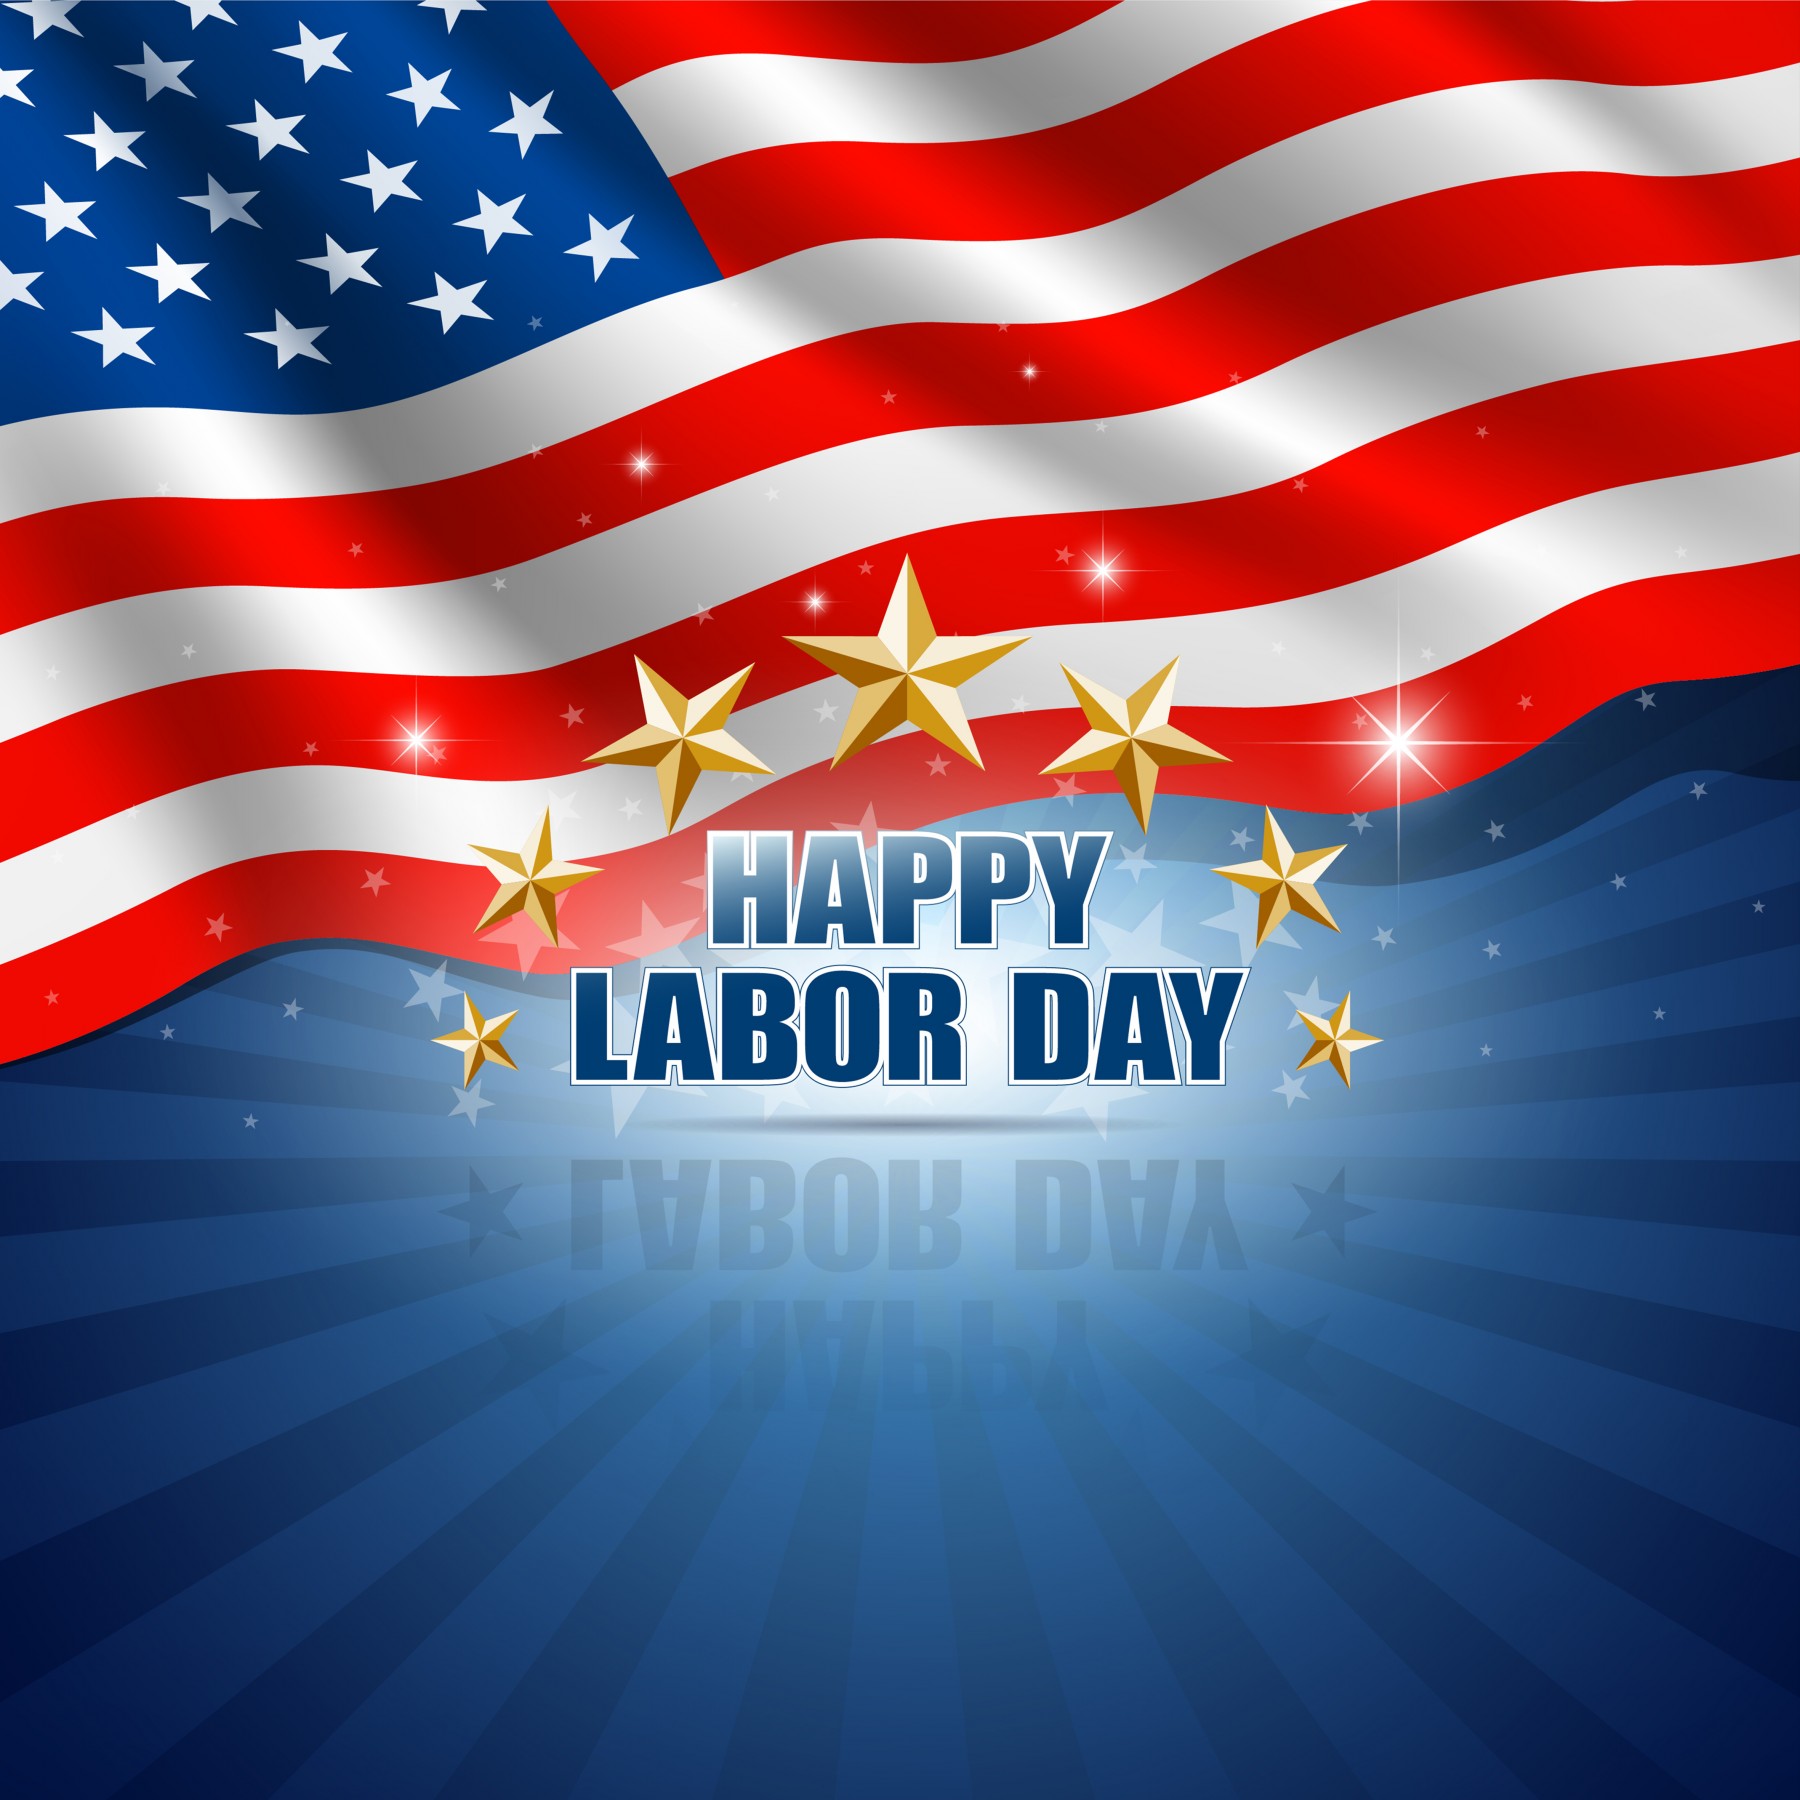 Happy Labor Day Wishes HD Wallpaper Image Photo